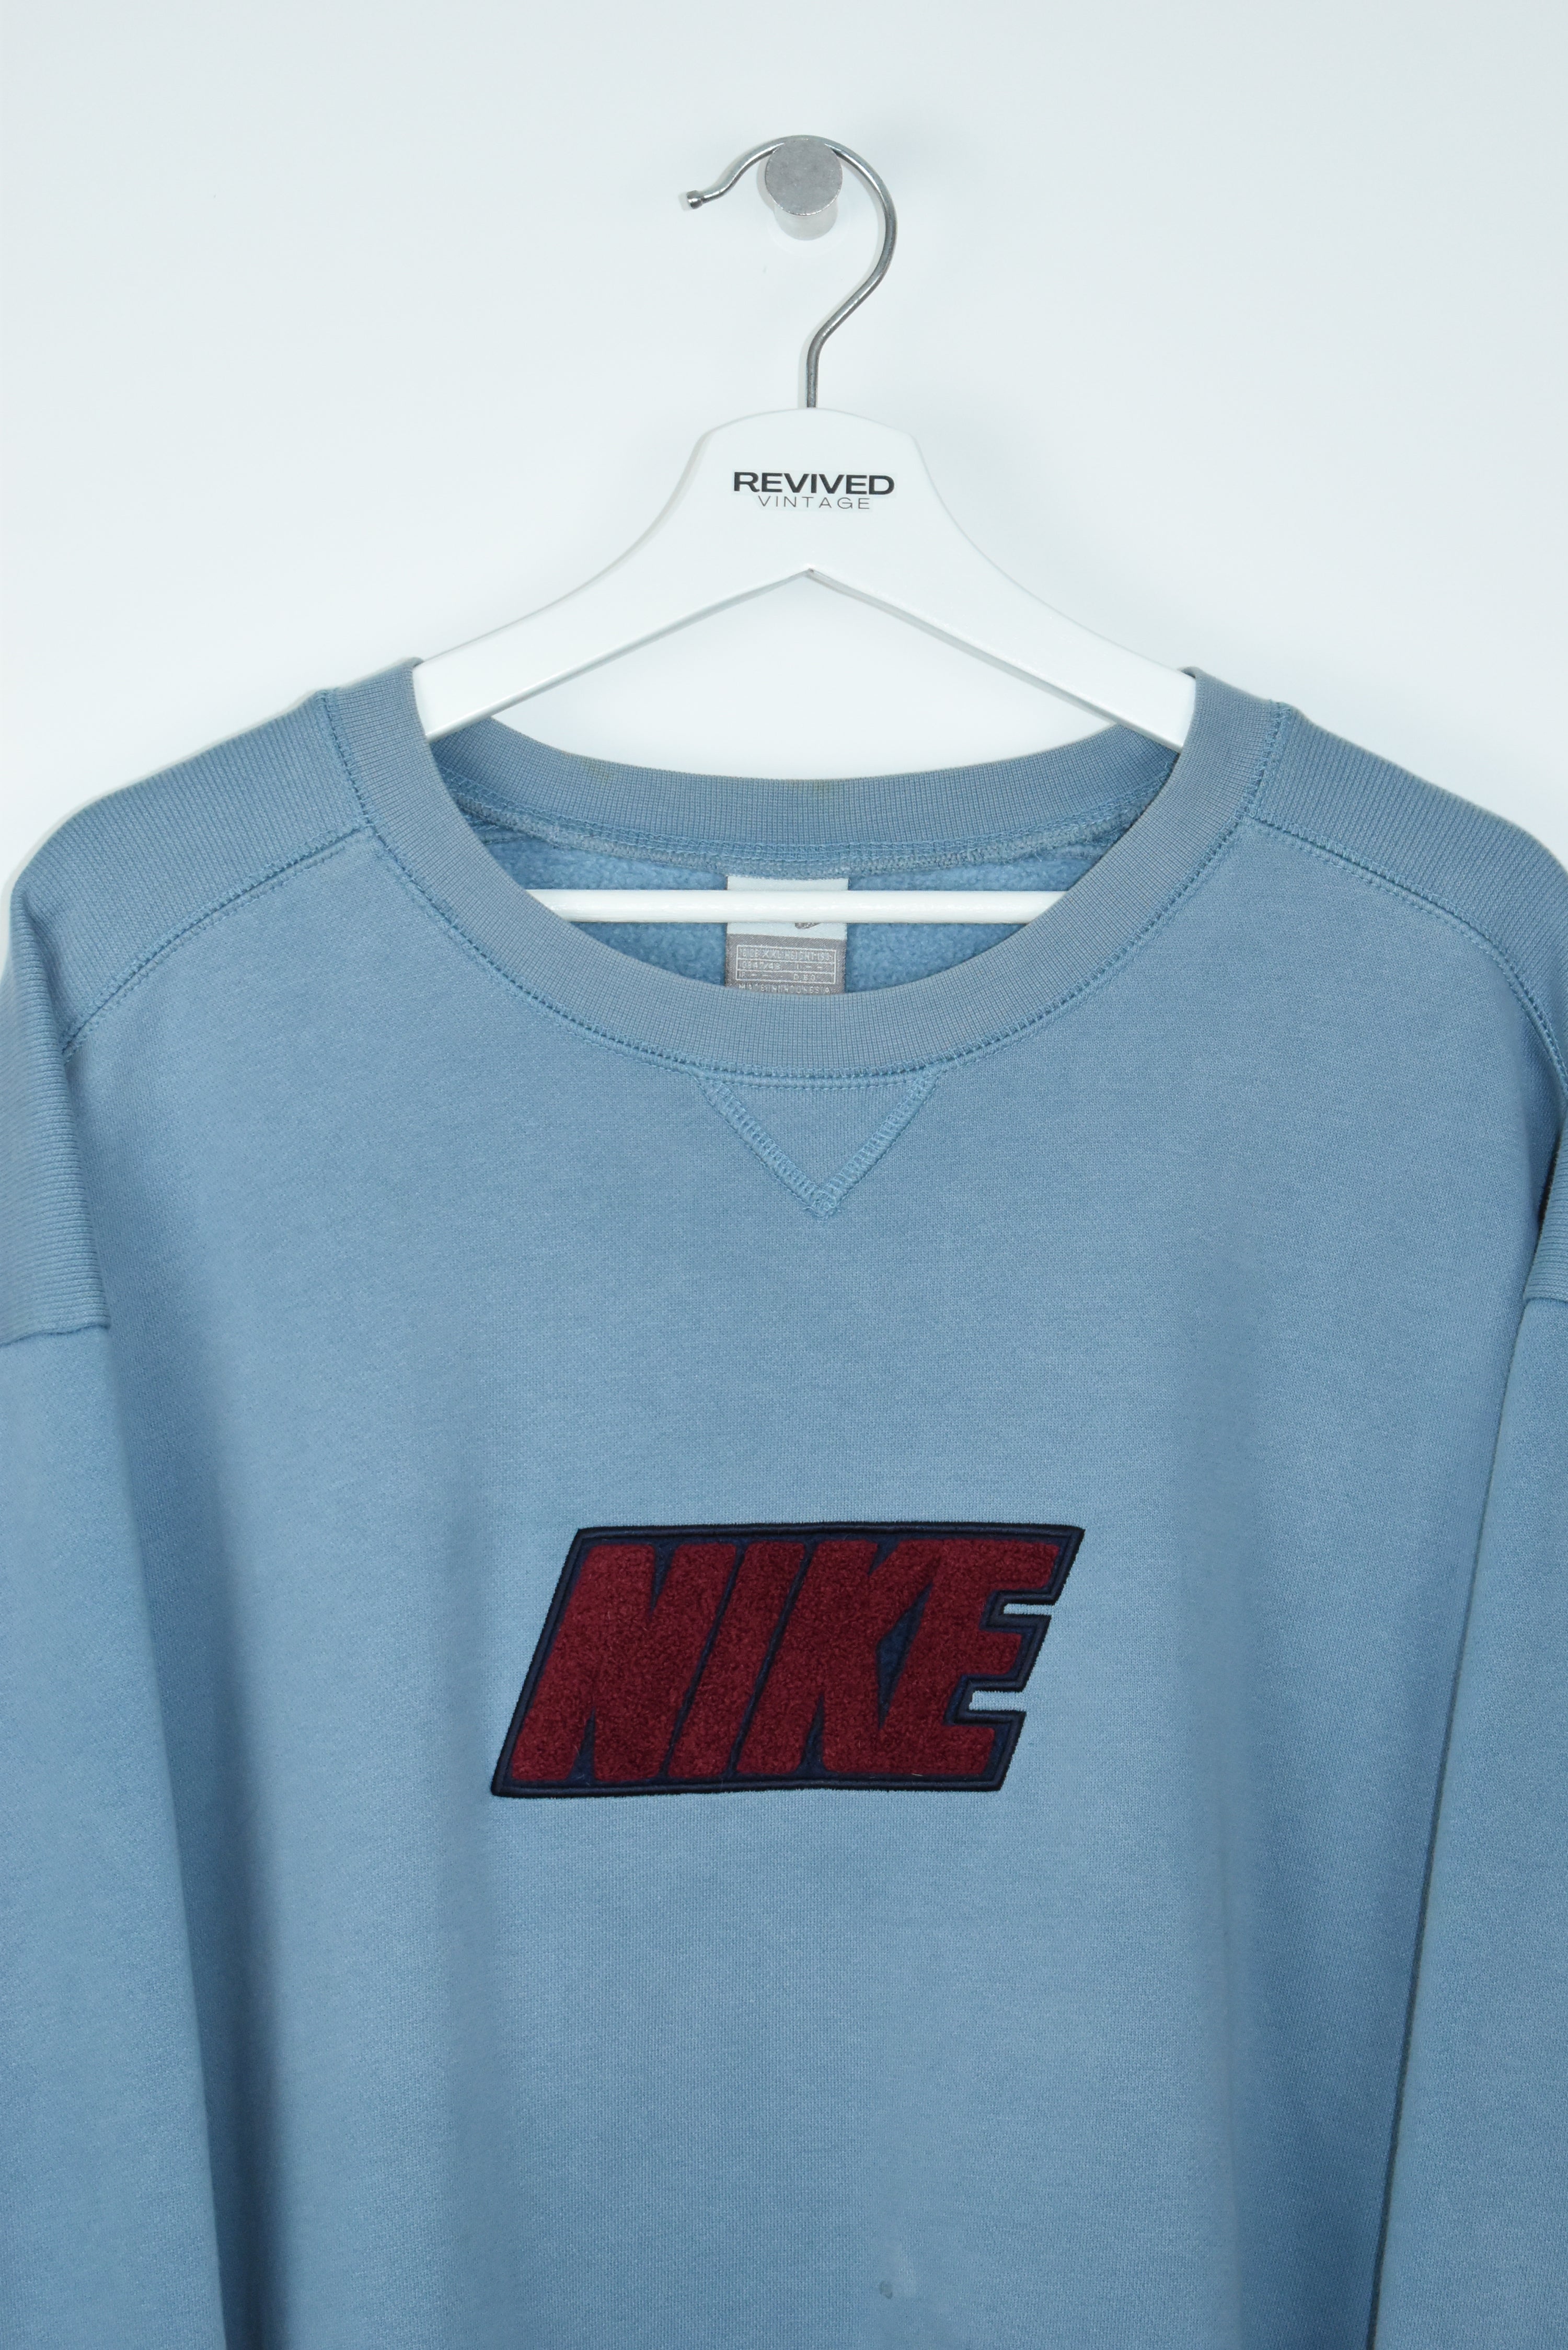 Vintage Nike Embroidery Carpet Print Sweatshirt XXL